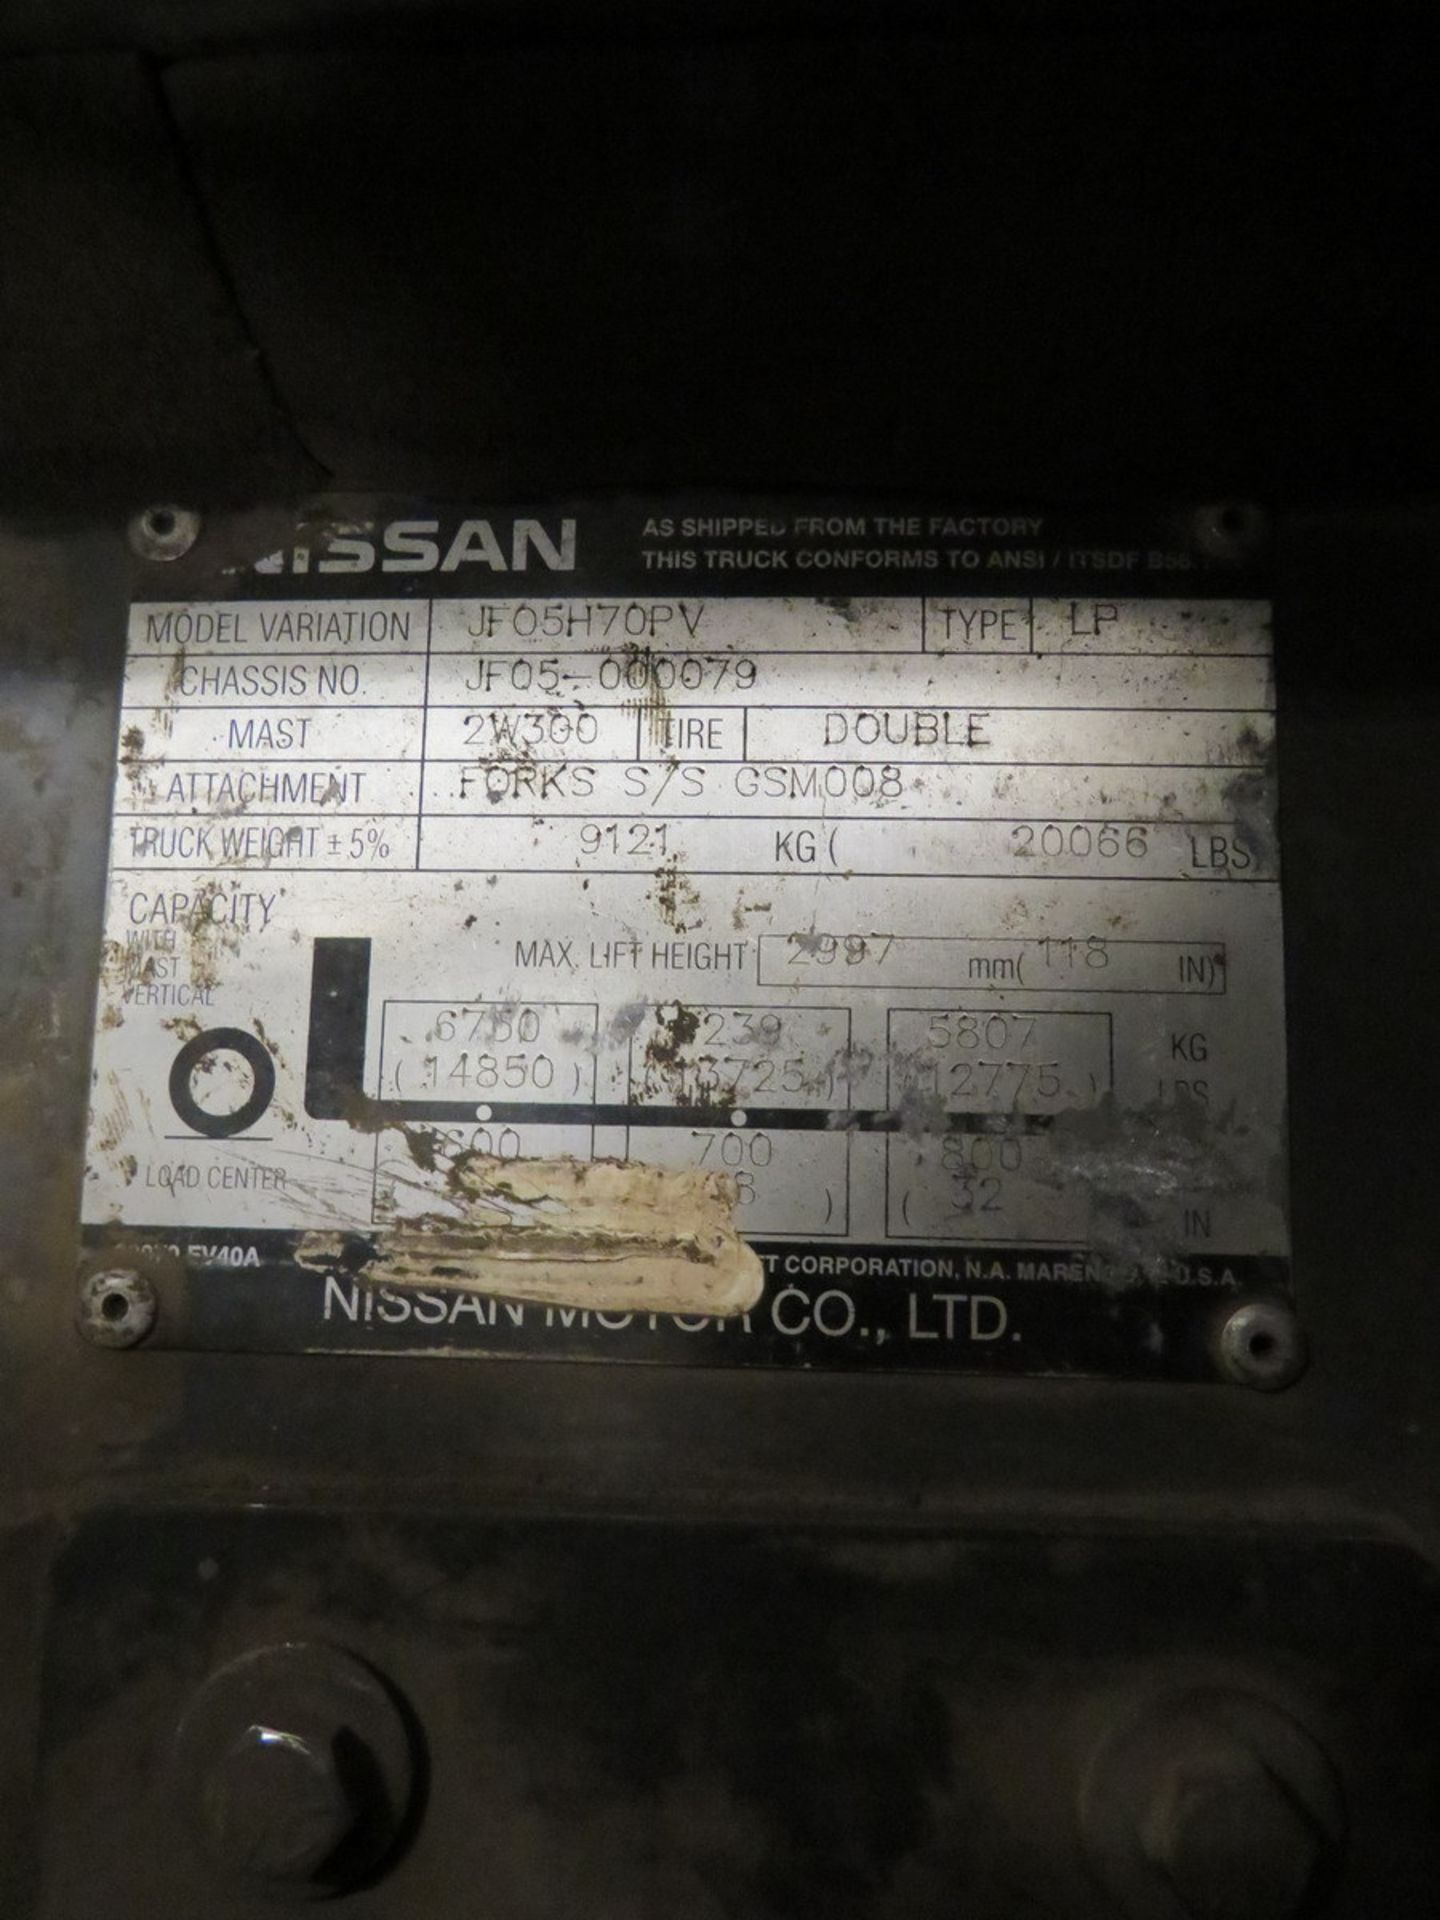 Nissan JF05H70PV Propane Forklift - Image 30 of 30